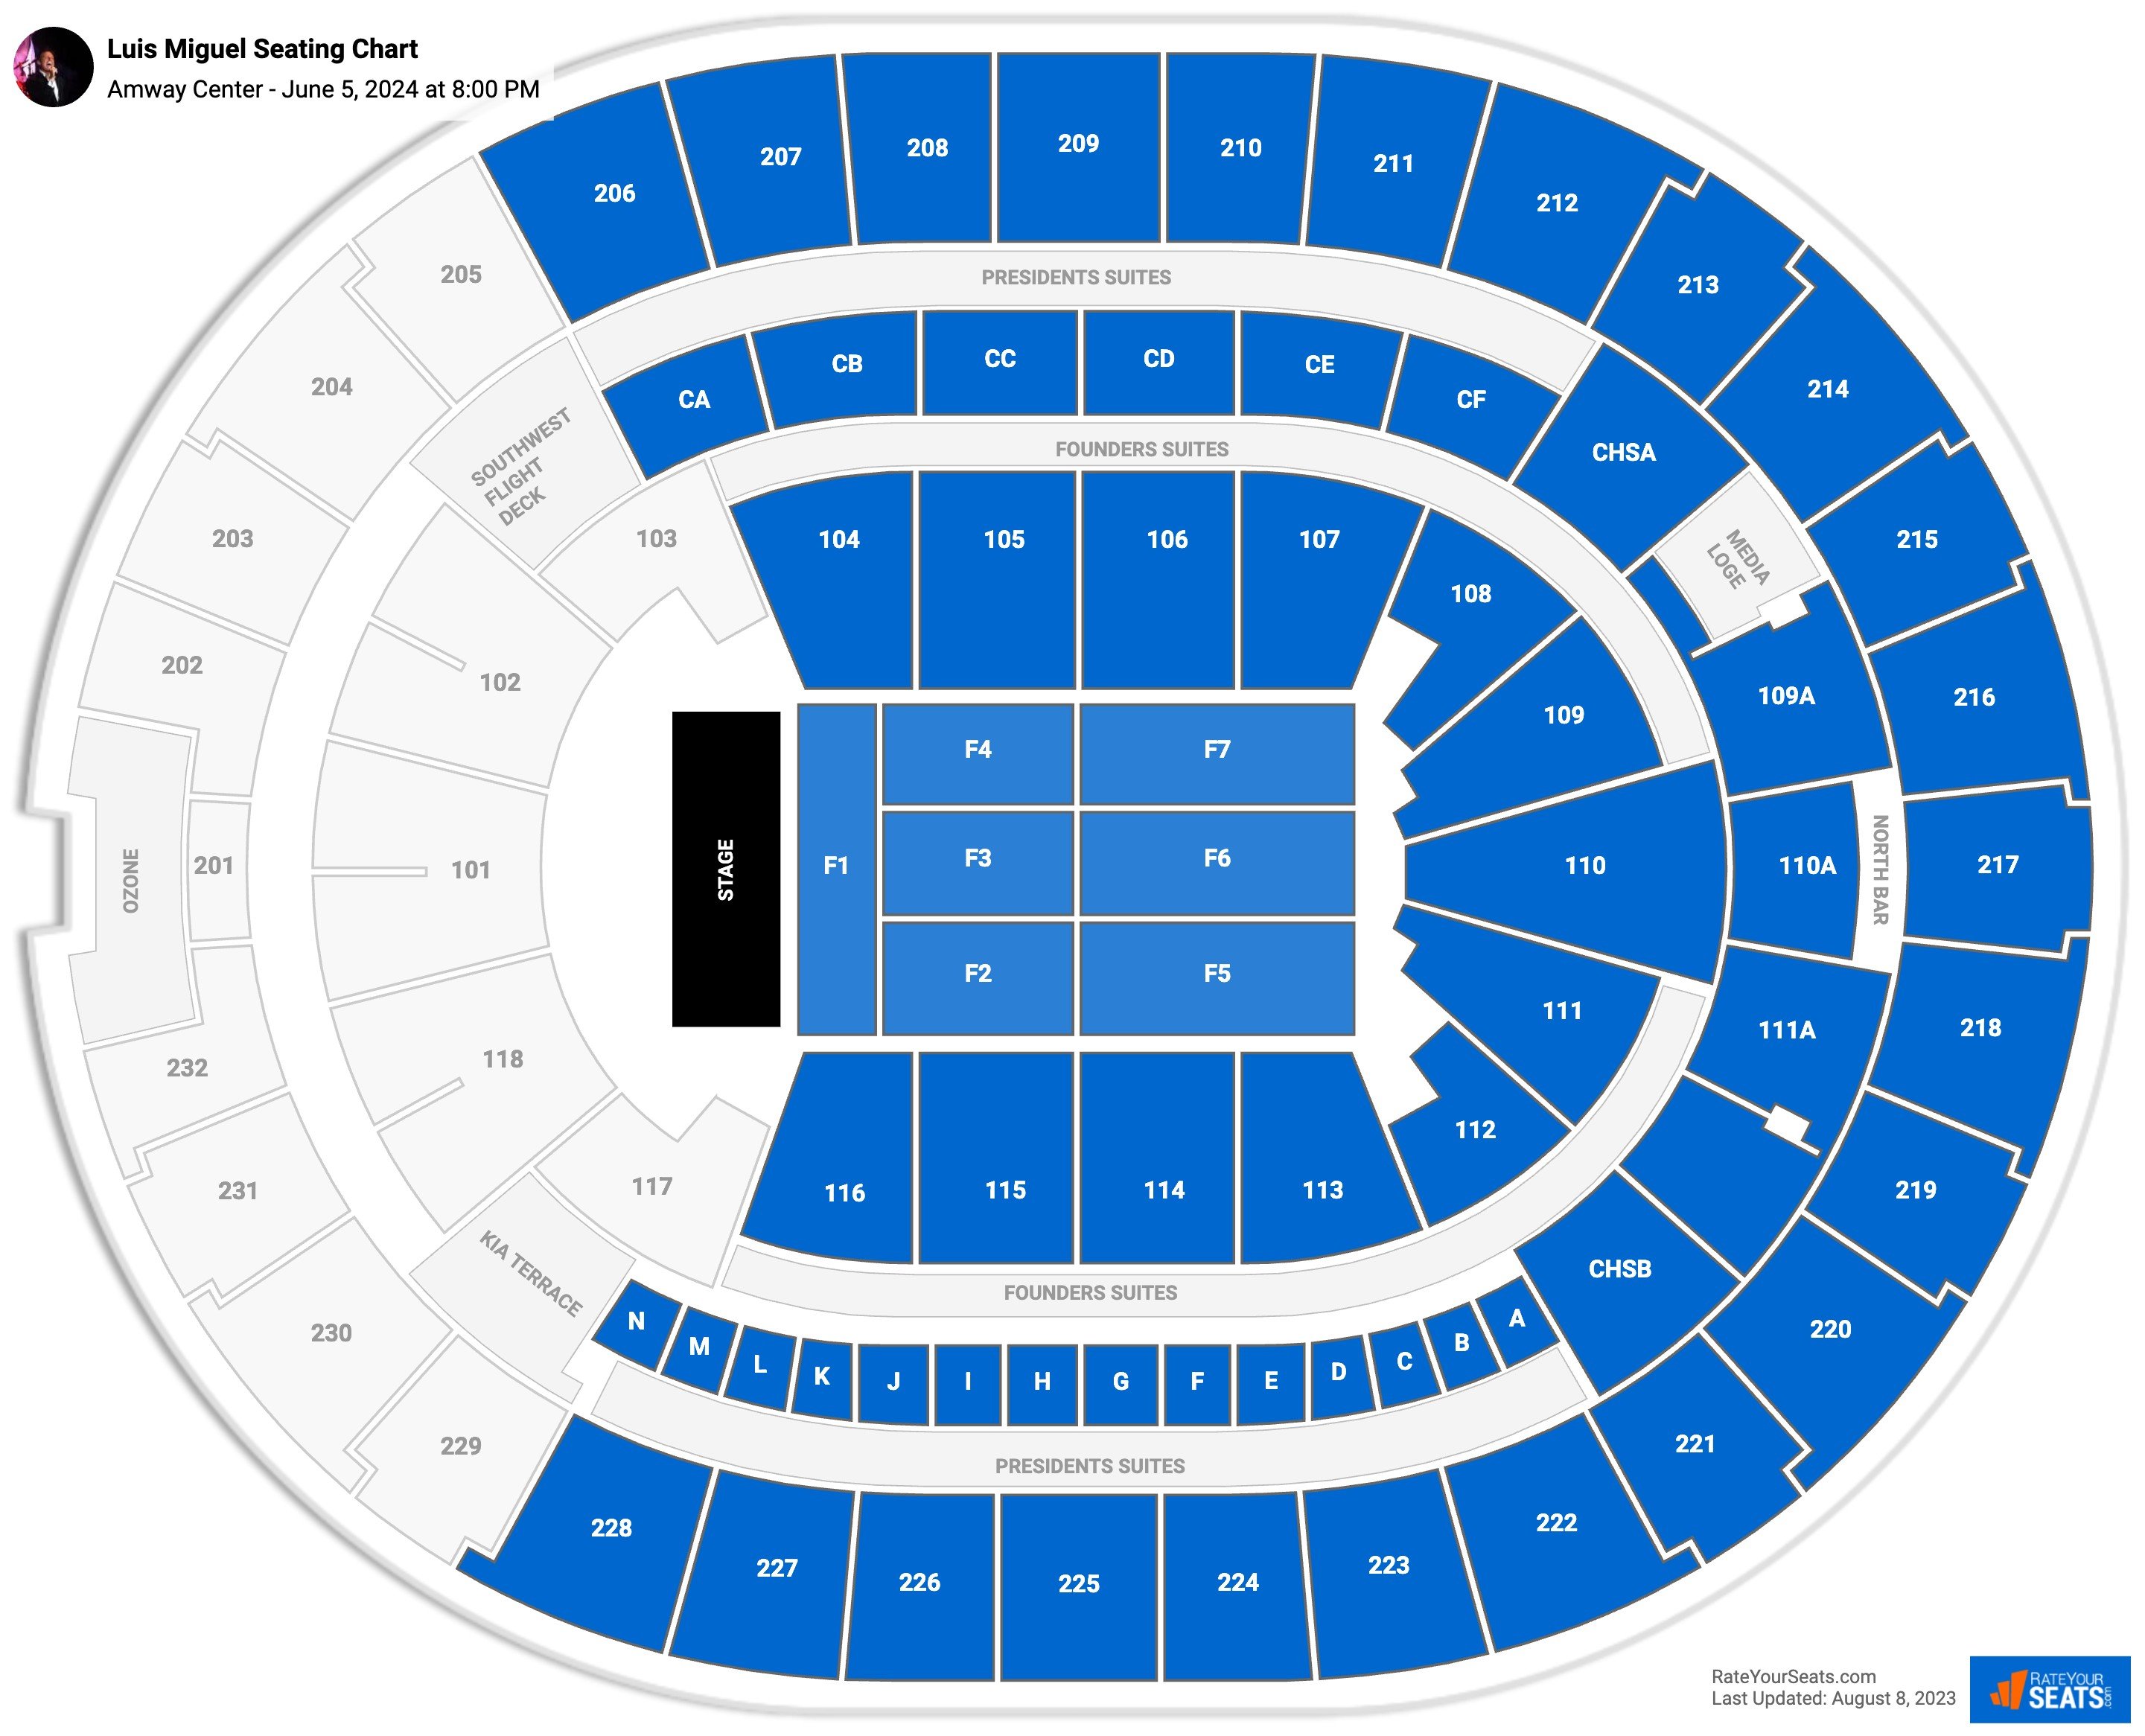 Kia Center Concert Seating Chart